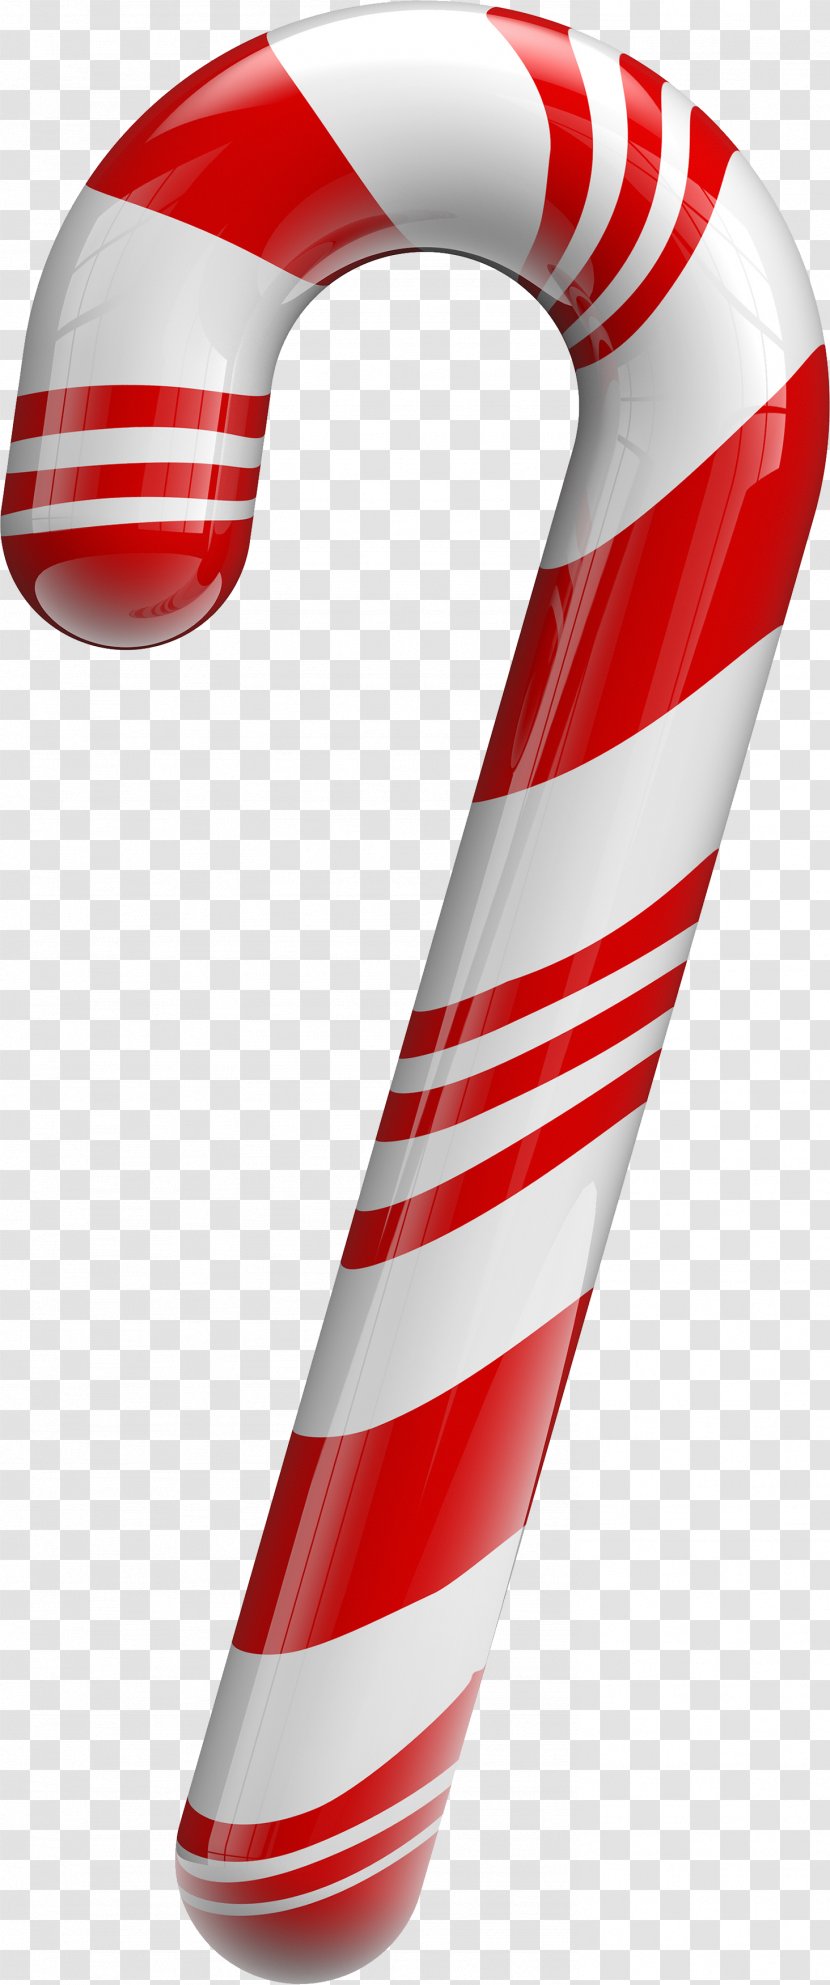 Candy Cane Lollipop Christmas Clip Art - Decorations, Canes, Free Pick Ups, Downloads Transparent PNG